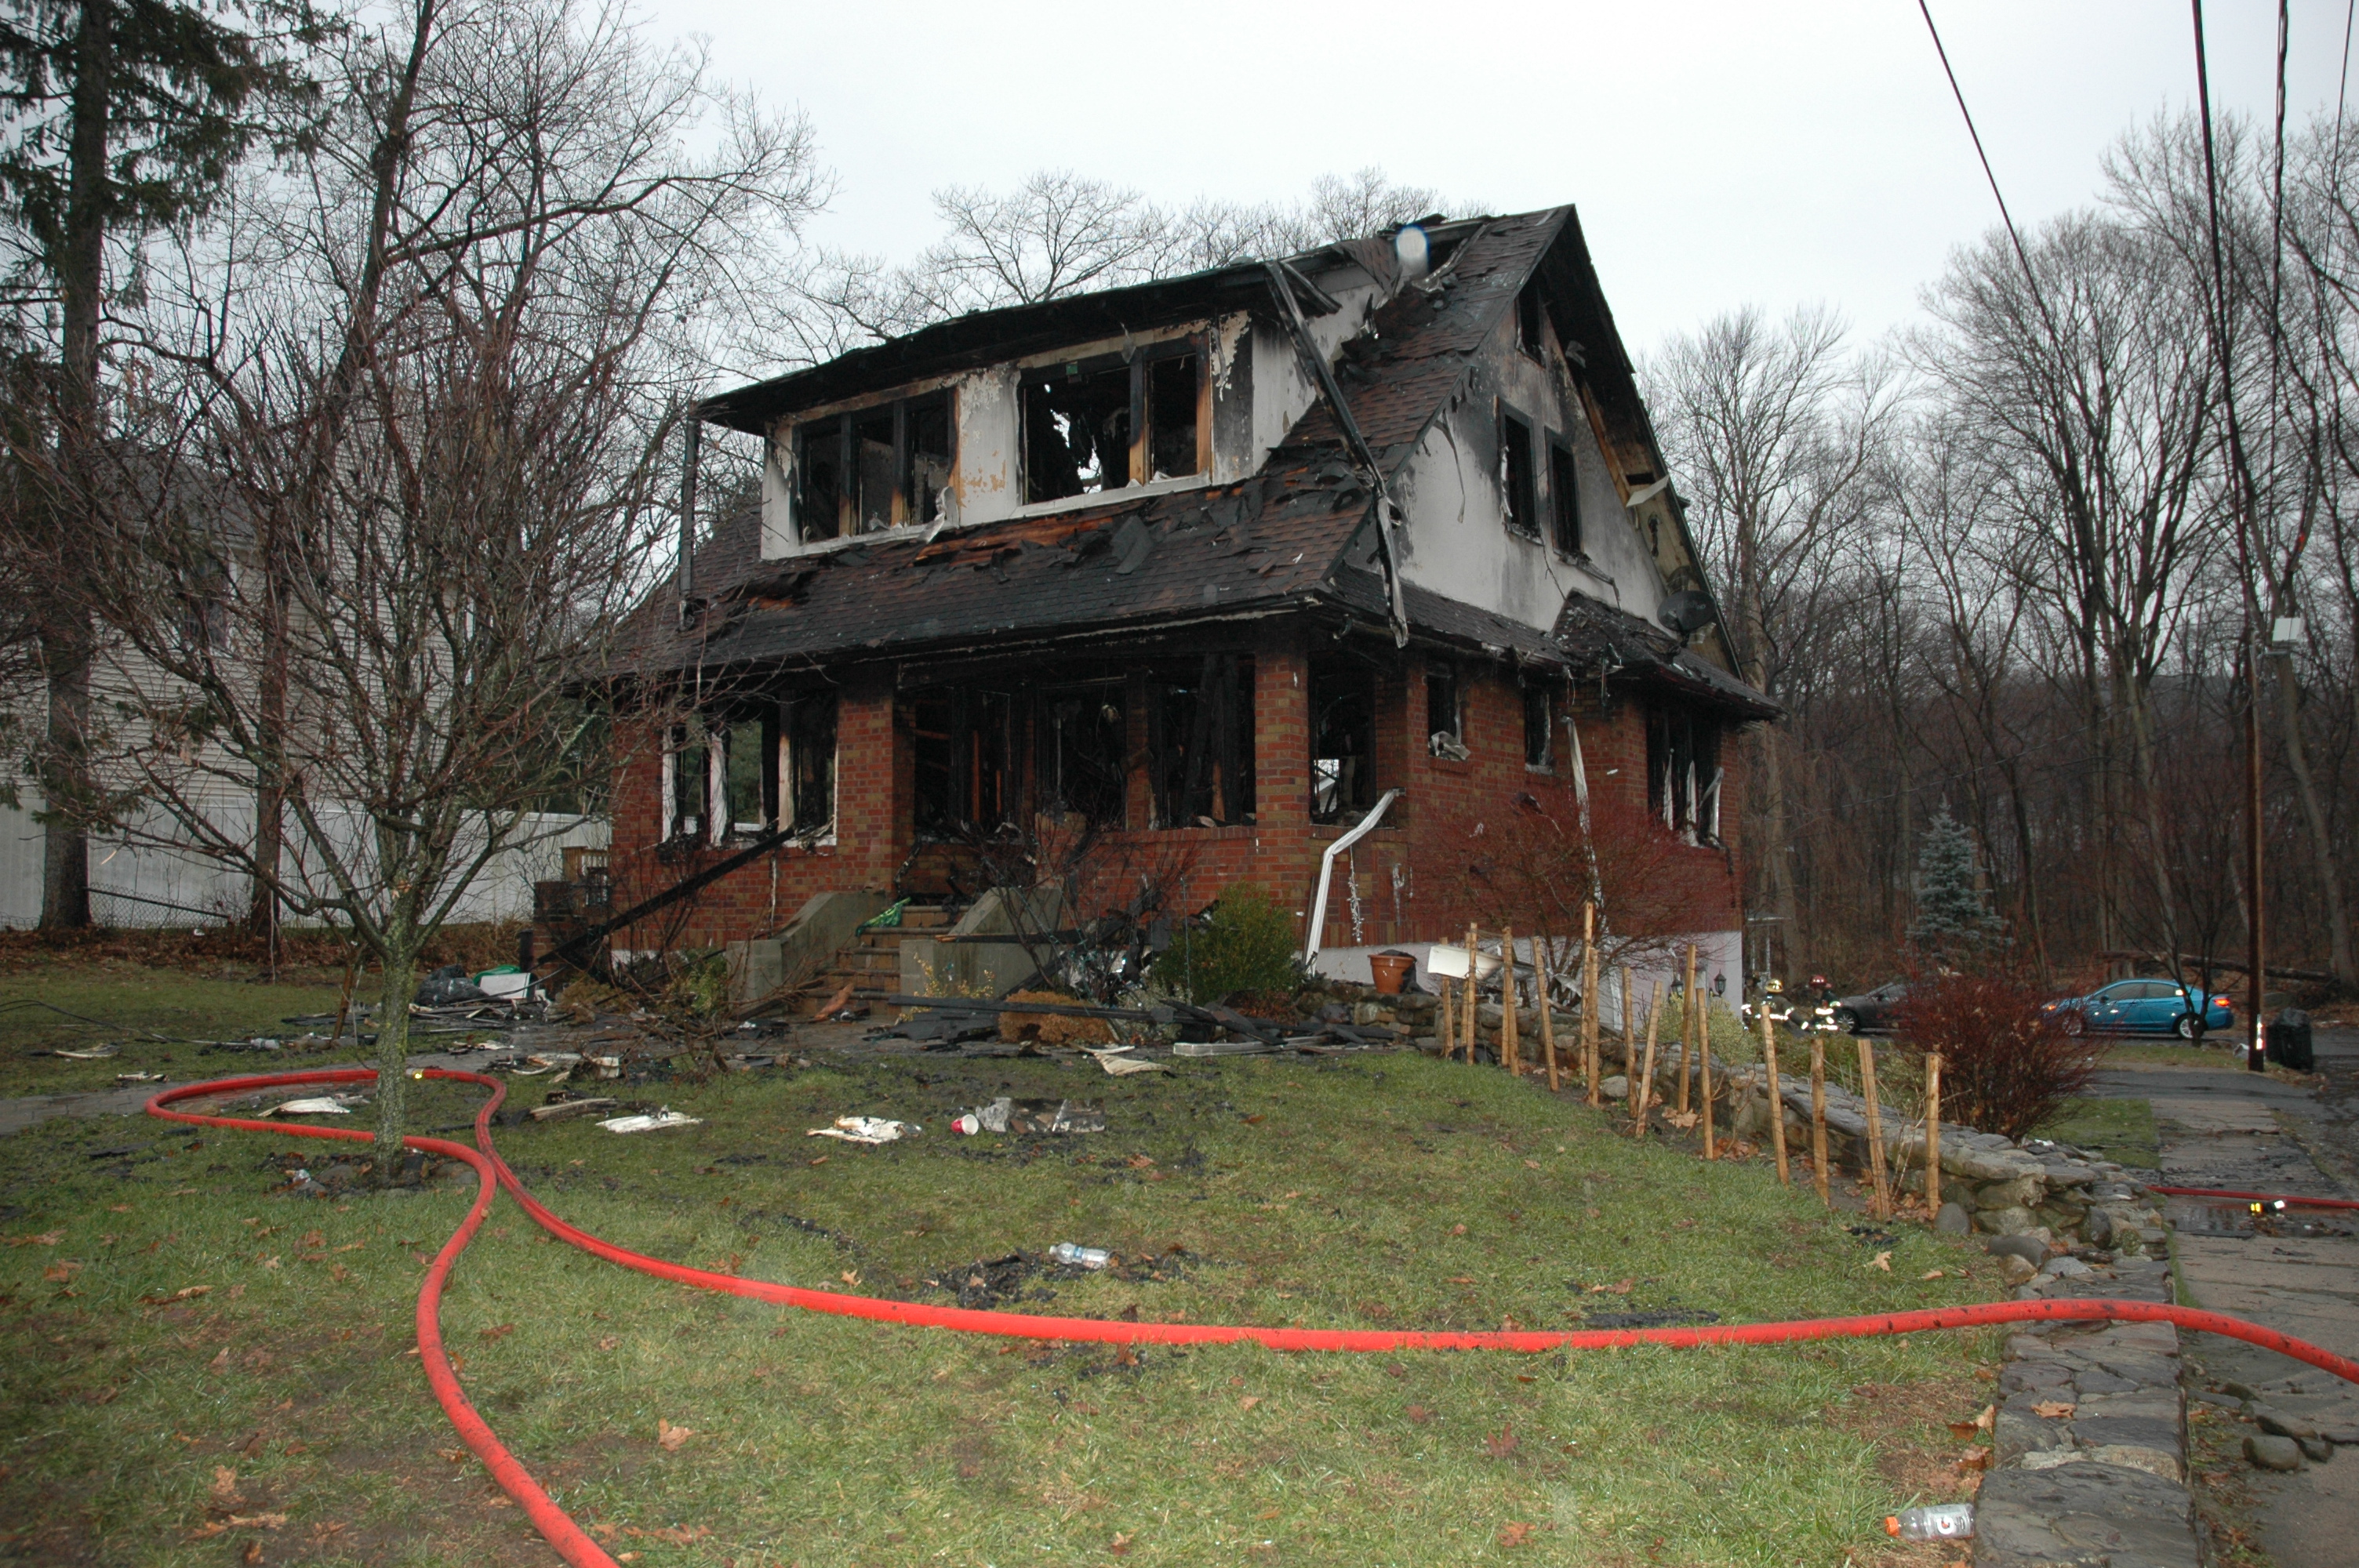 Damaged house at 18 Boulevard, Suffern, NY